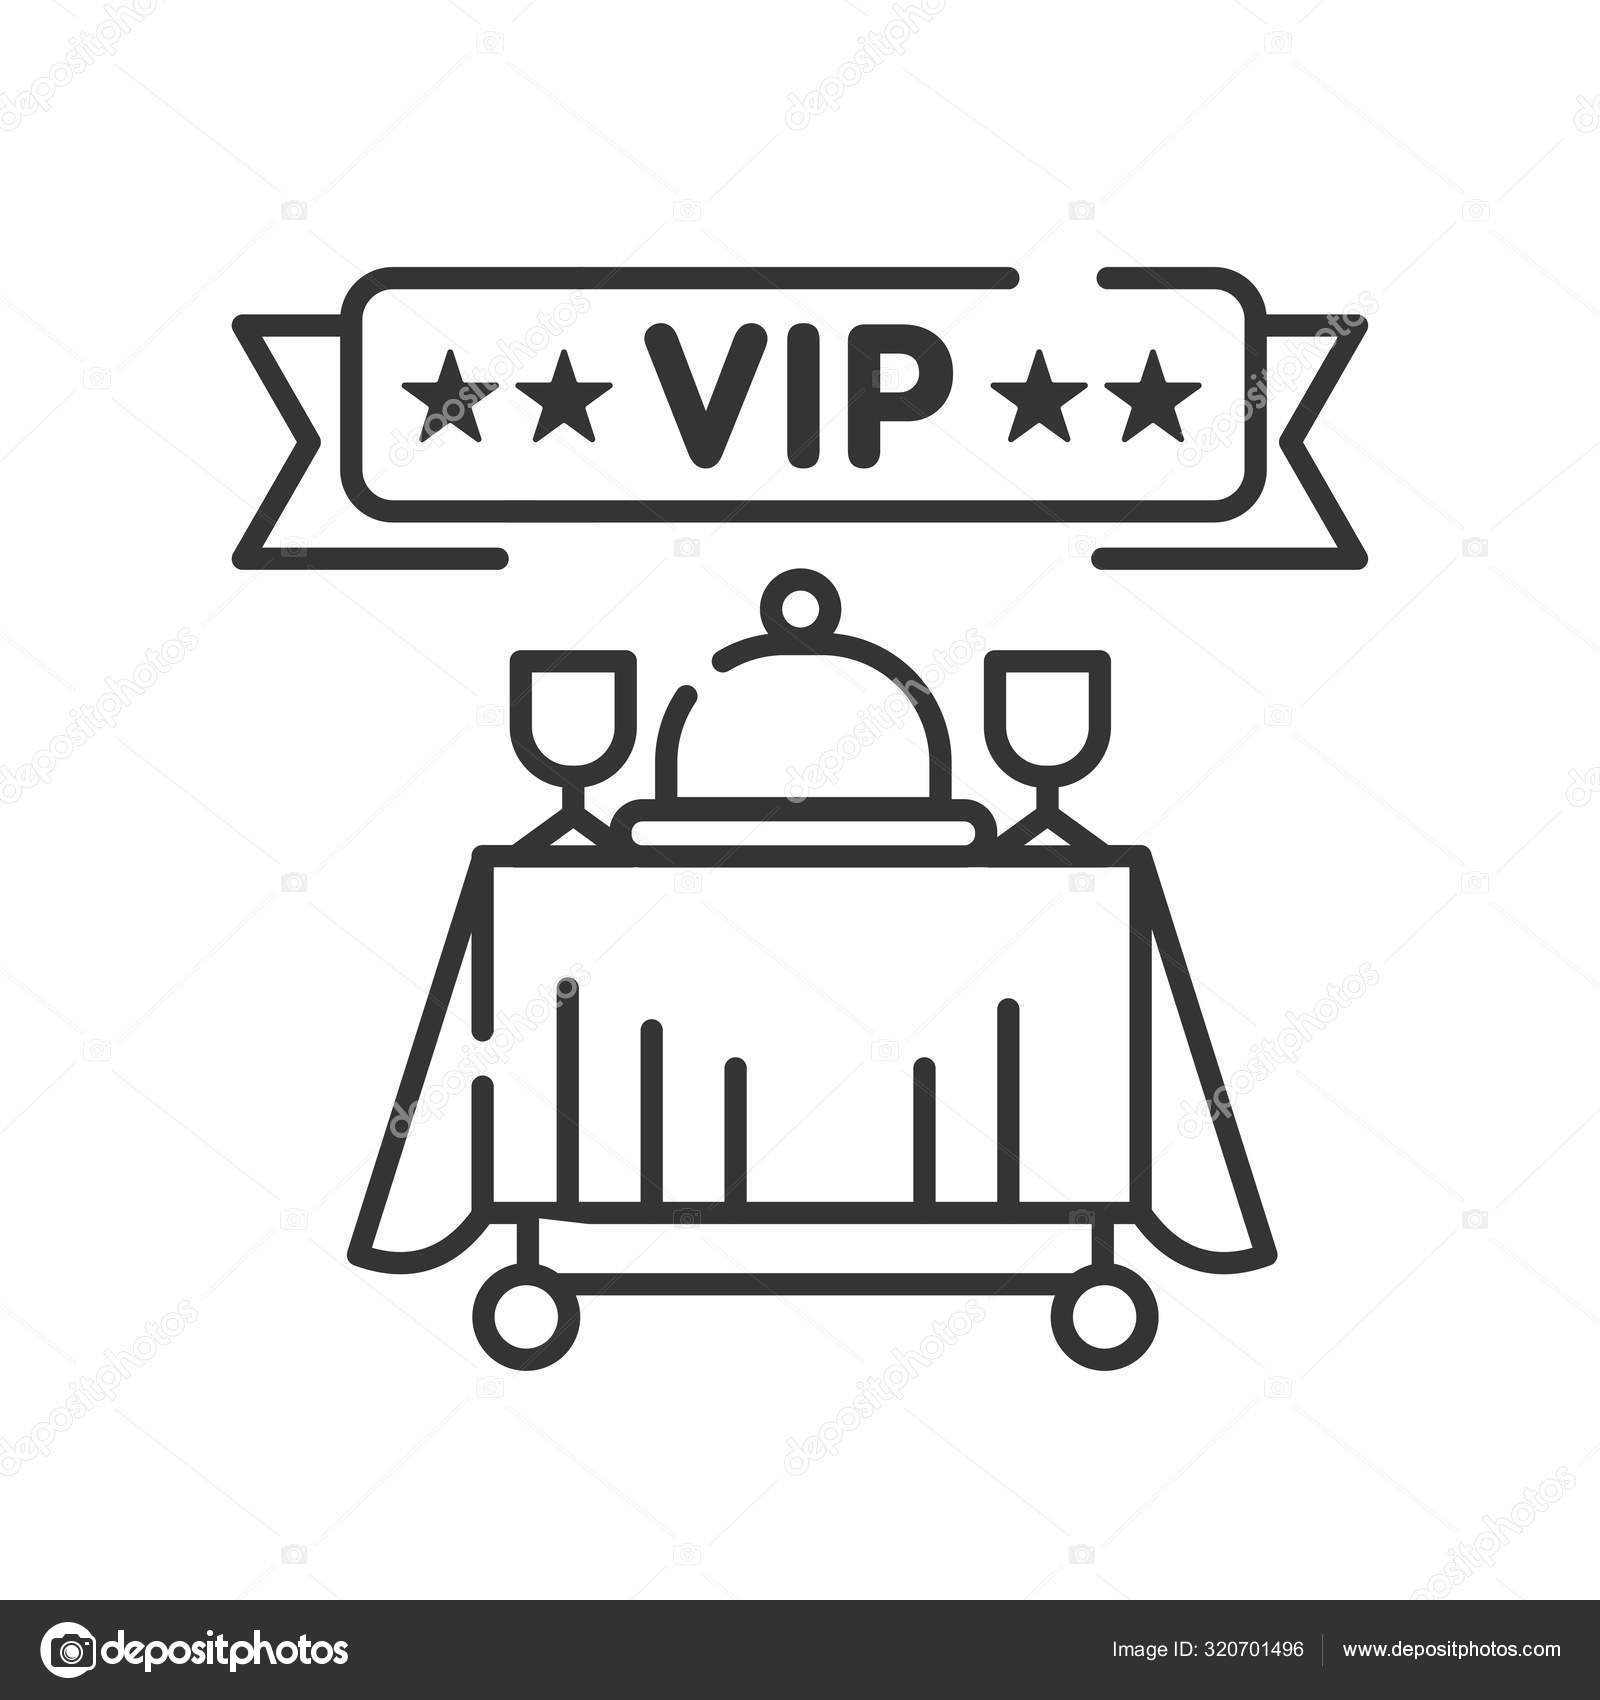 Vip Restoraunt Line Black Icon Gourmet Restaurant Prestigious Party Service Luxury Reception Food And Drinks Five Star Restaurant Vector Image By C Alx1618 Vector Stock